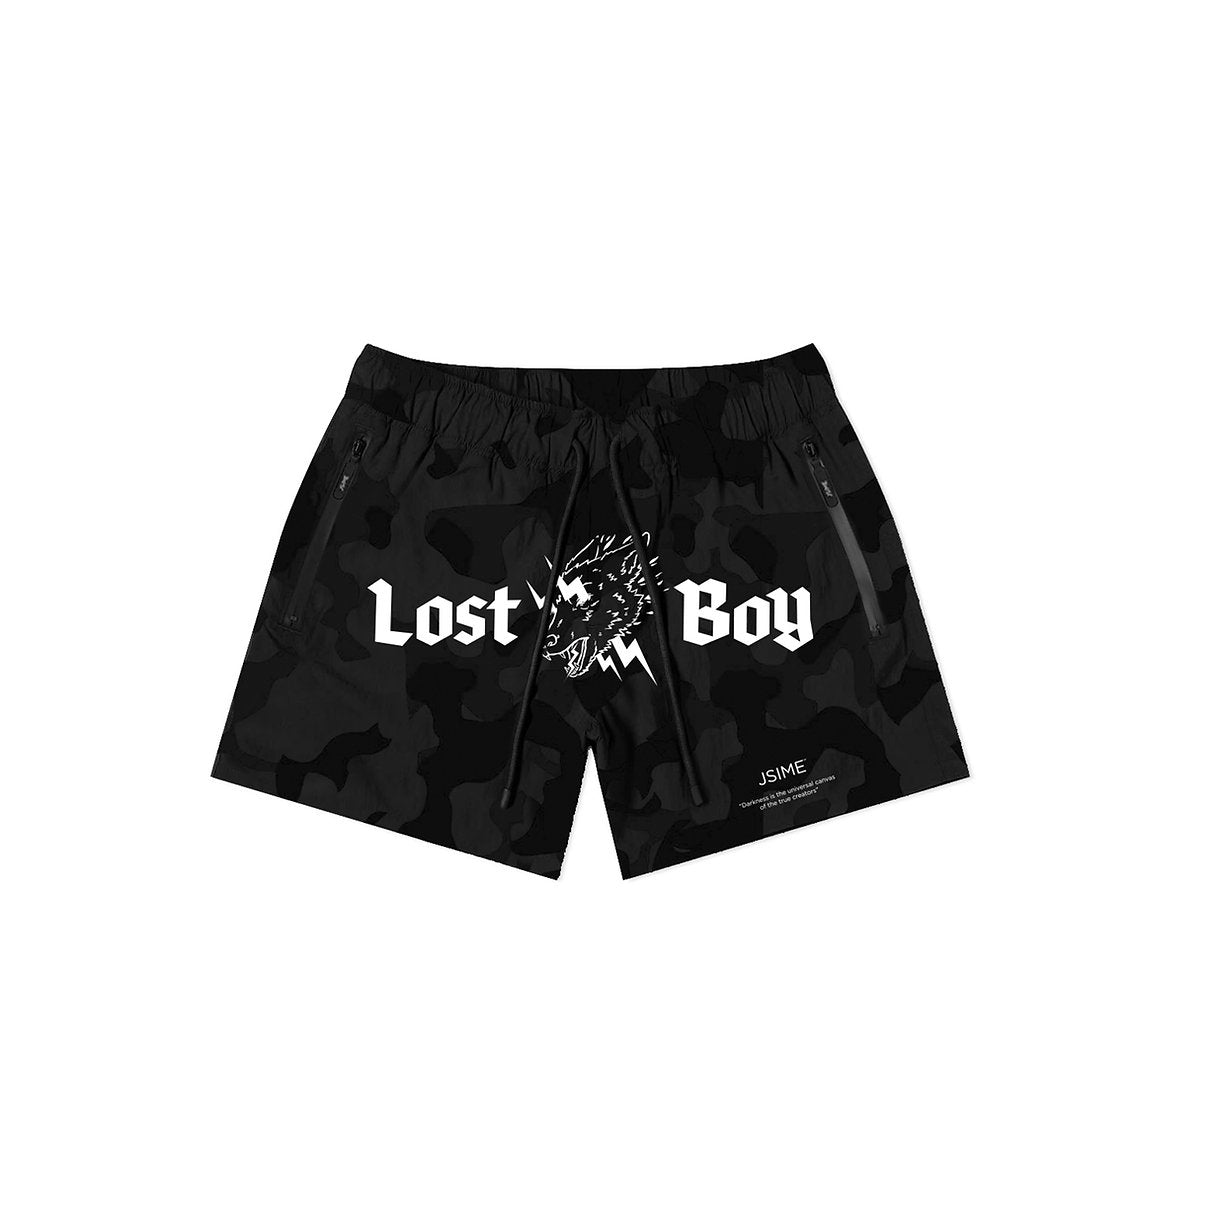 Lost Boy Camo Shorts | JSIME